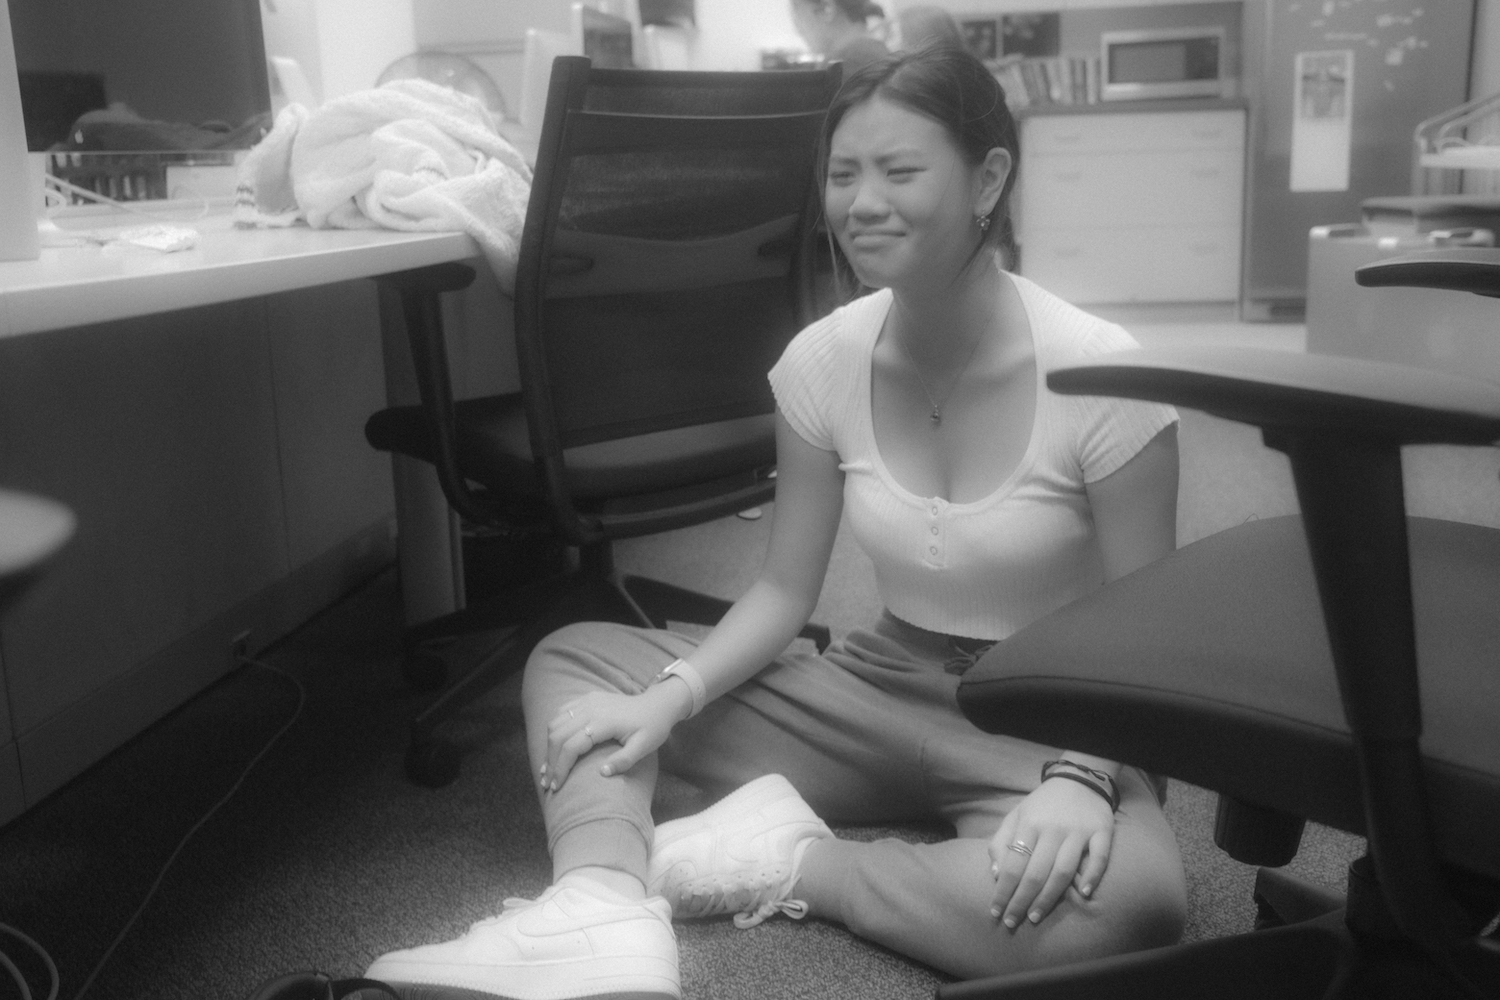 Eileen Liu cries while sitting on the floor